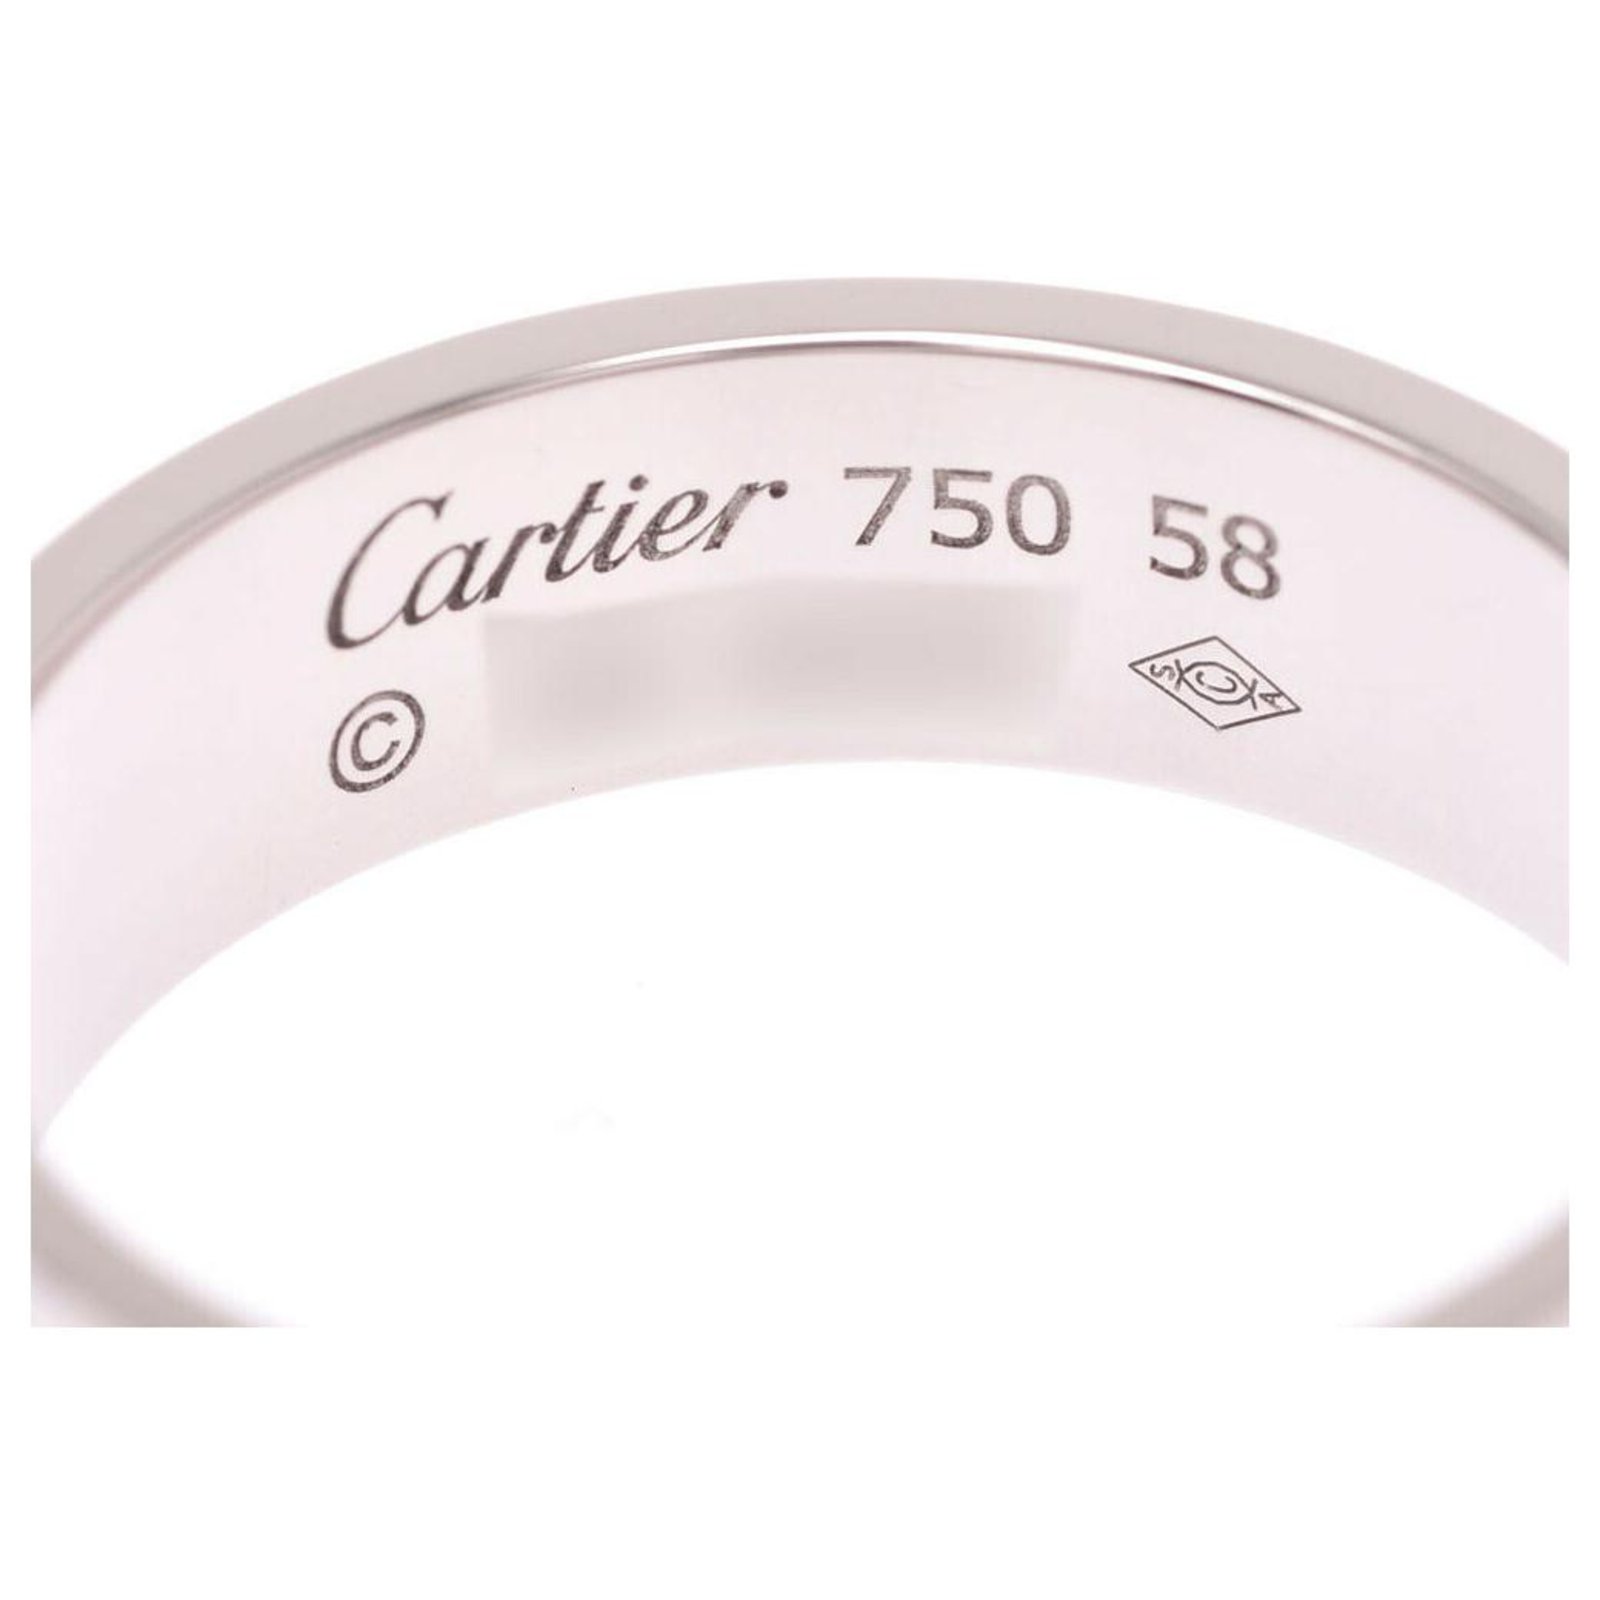 cartier love ring 750 58